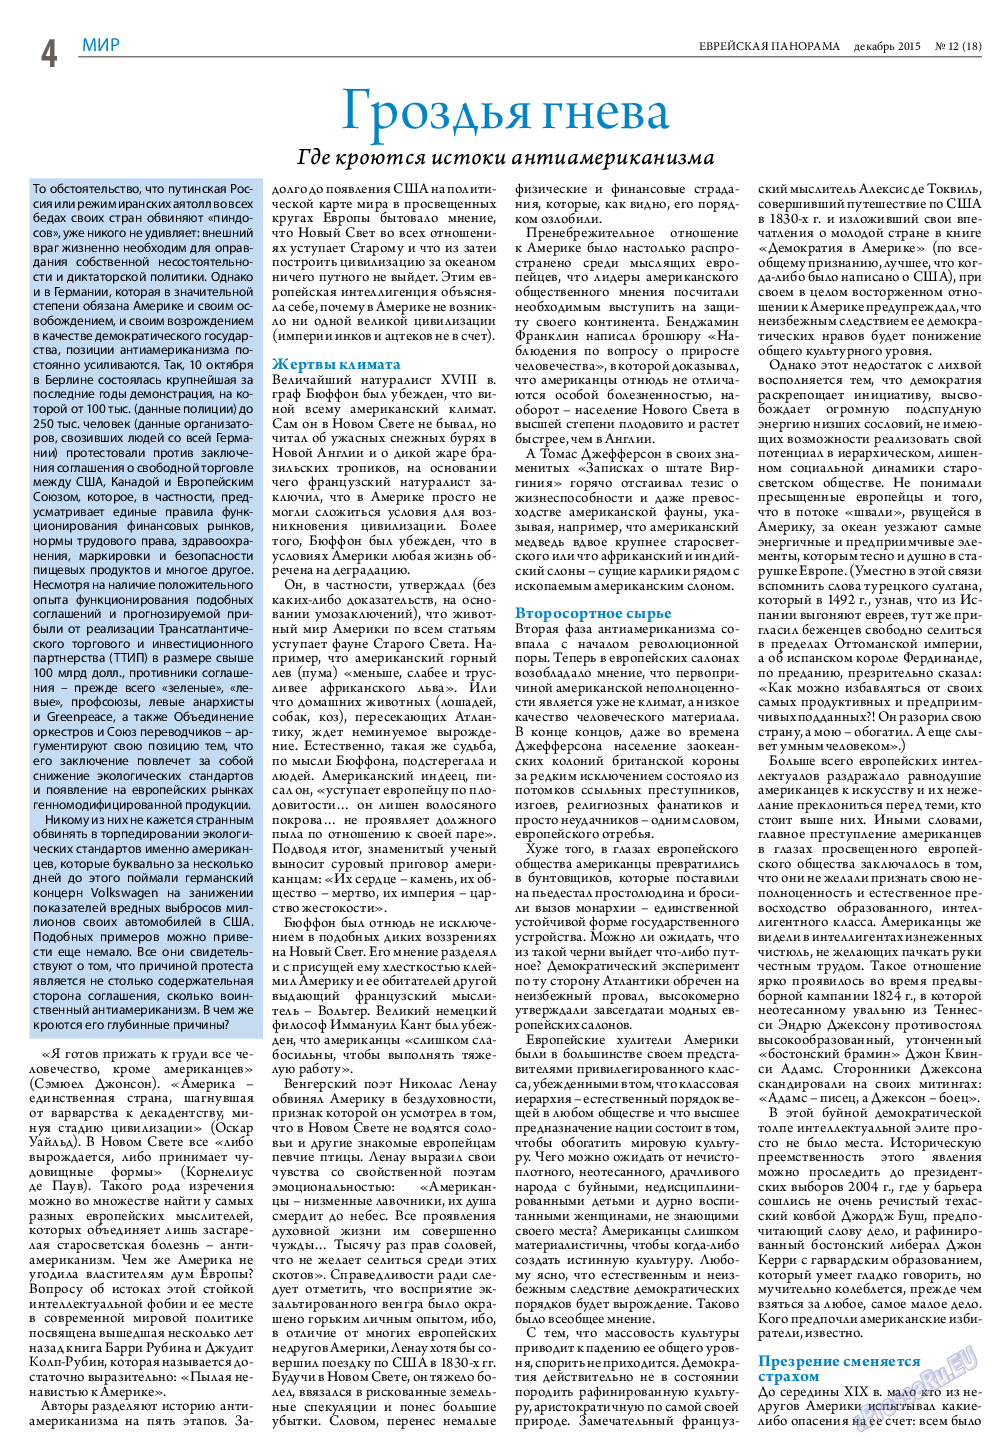 Еврейская панорама, газета. 2015 №12 стр.4